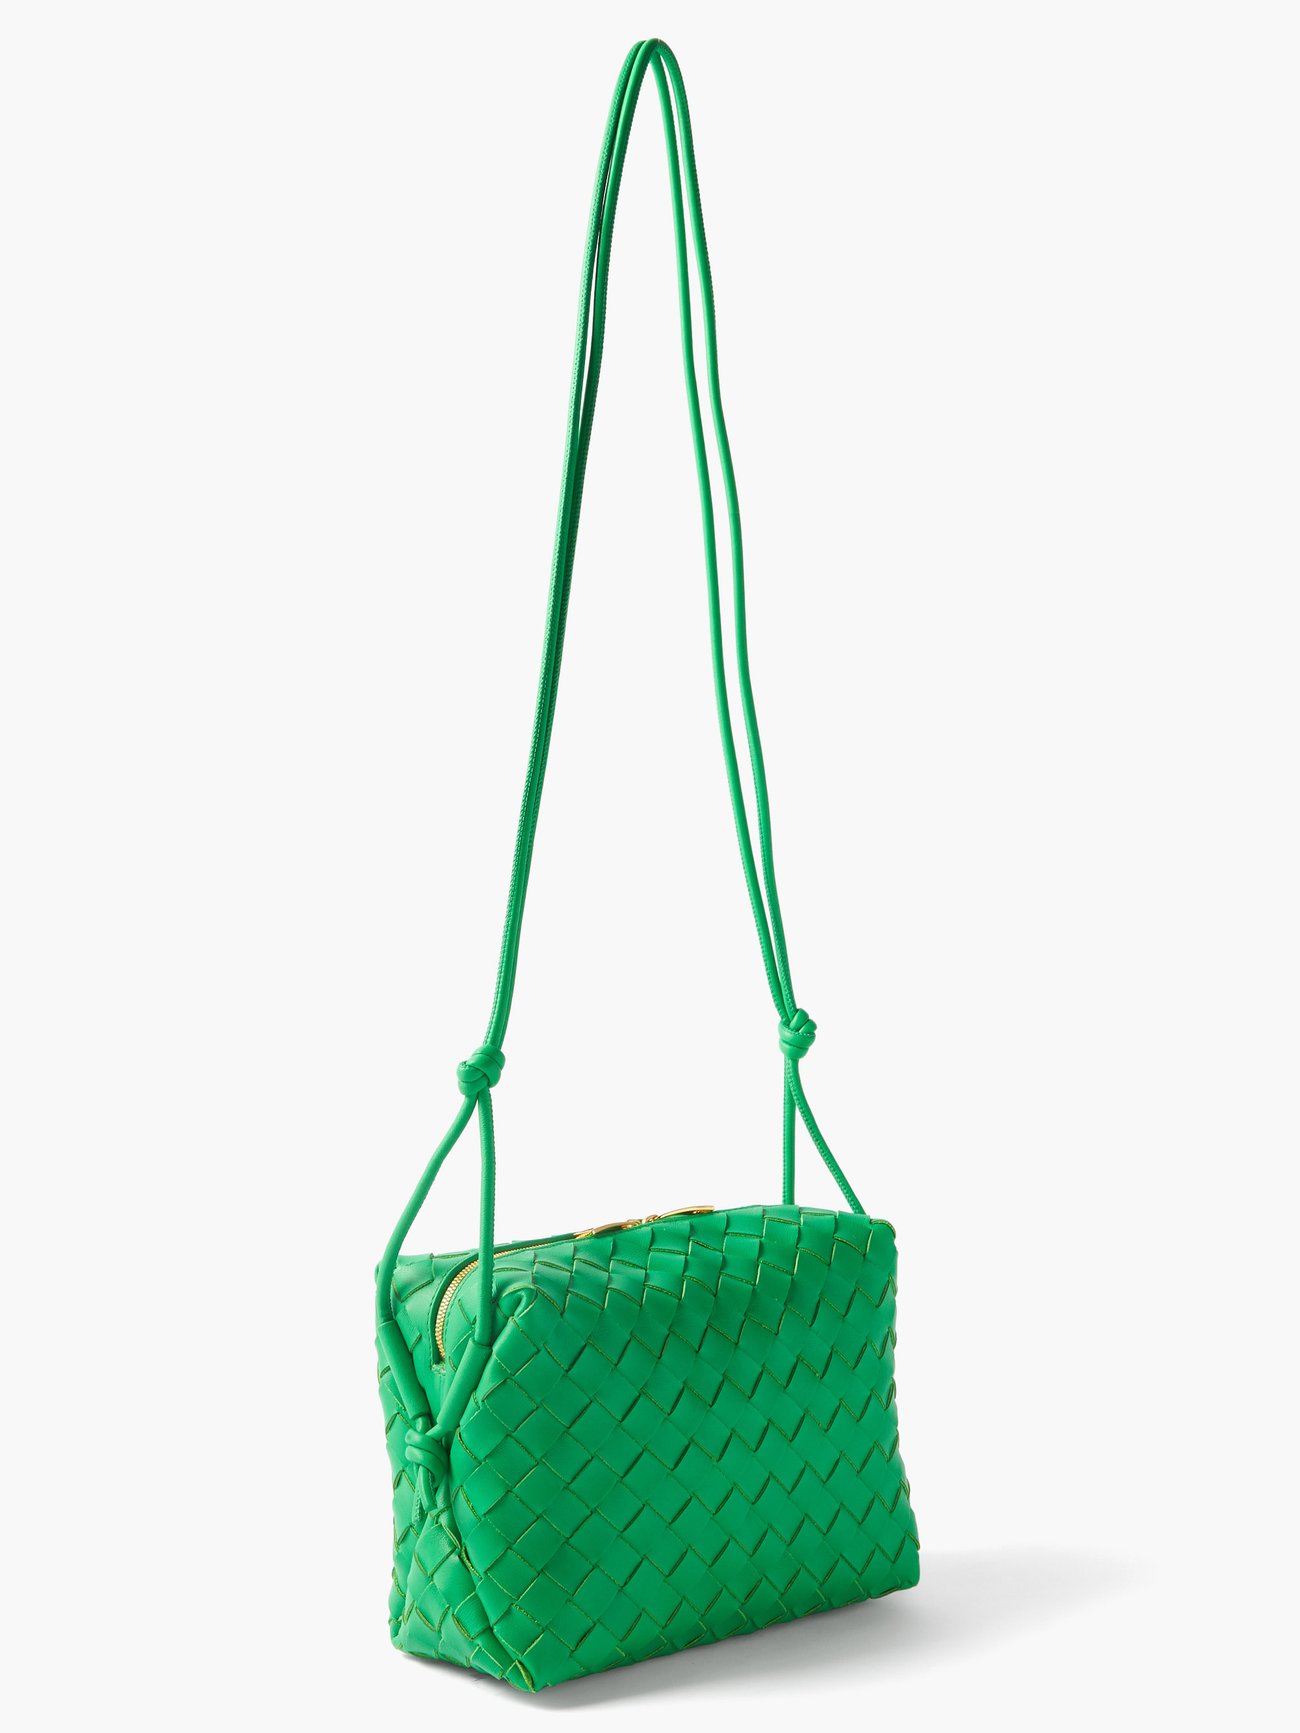 Bottega Veneta Loop Green Leather Shoulder Bag (Pre-Owned)